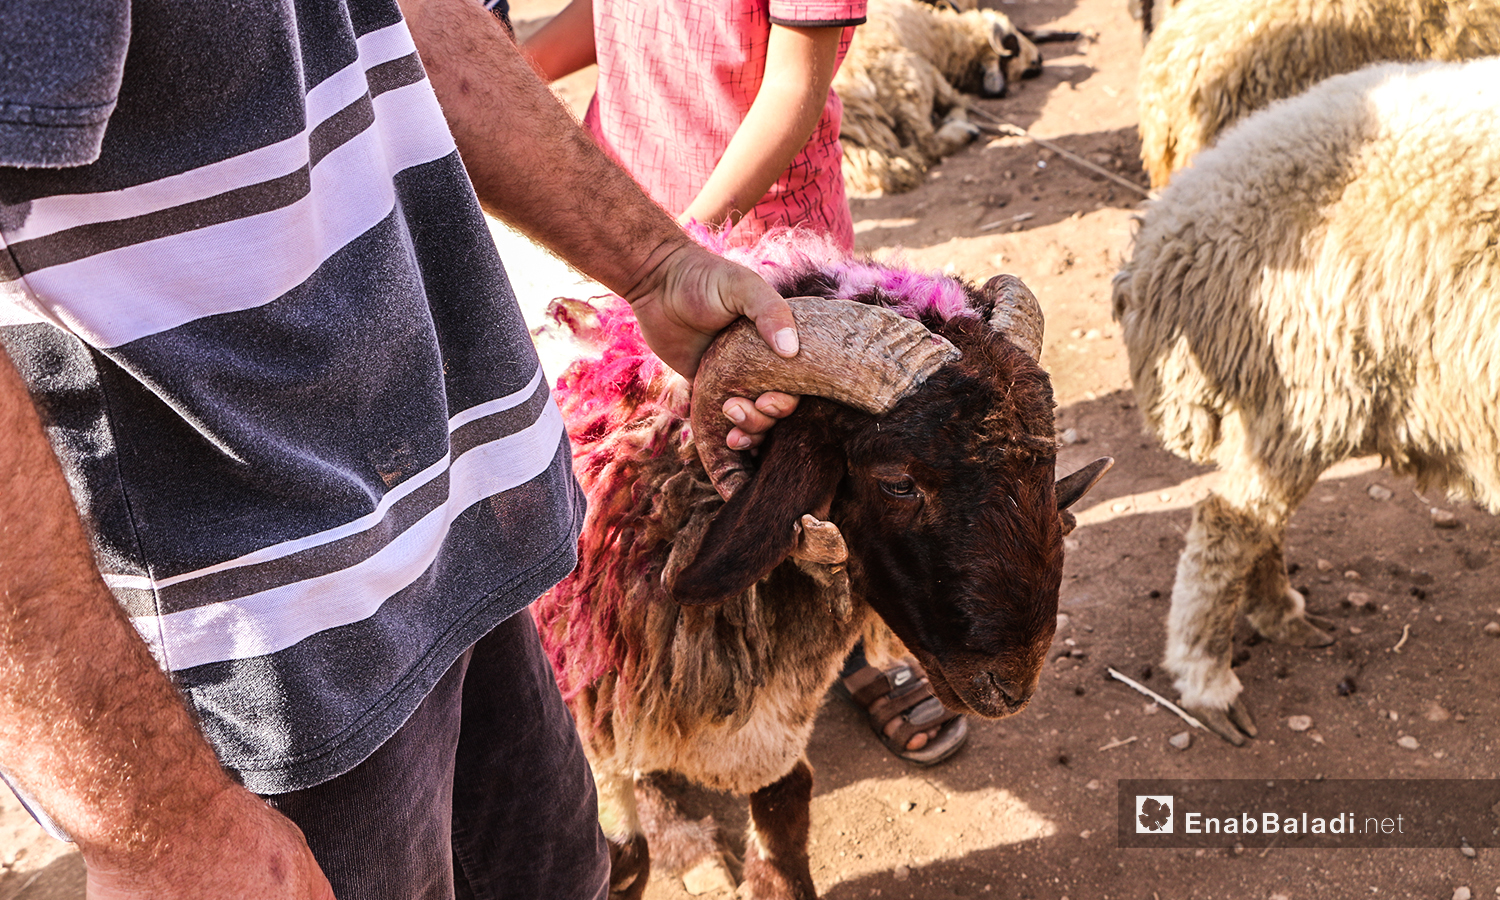 The purchase of sheep in Arshaf town days before Eid al-Adha – 27 July 2020 (Enab Baladi / Abdul Salam Majan)